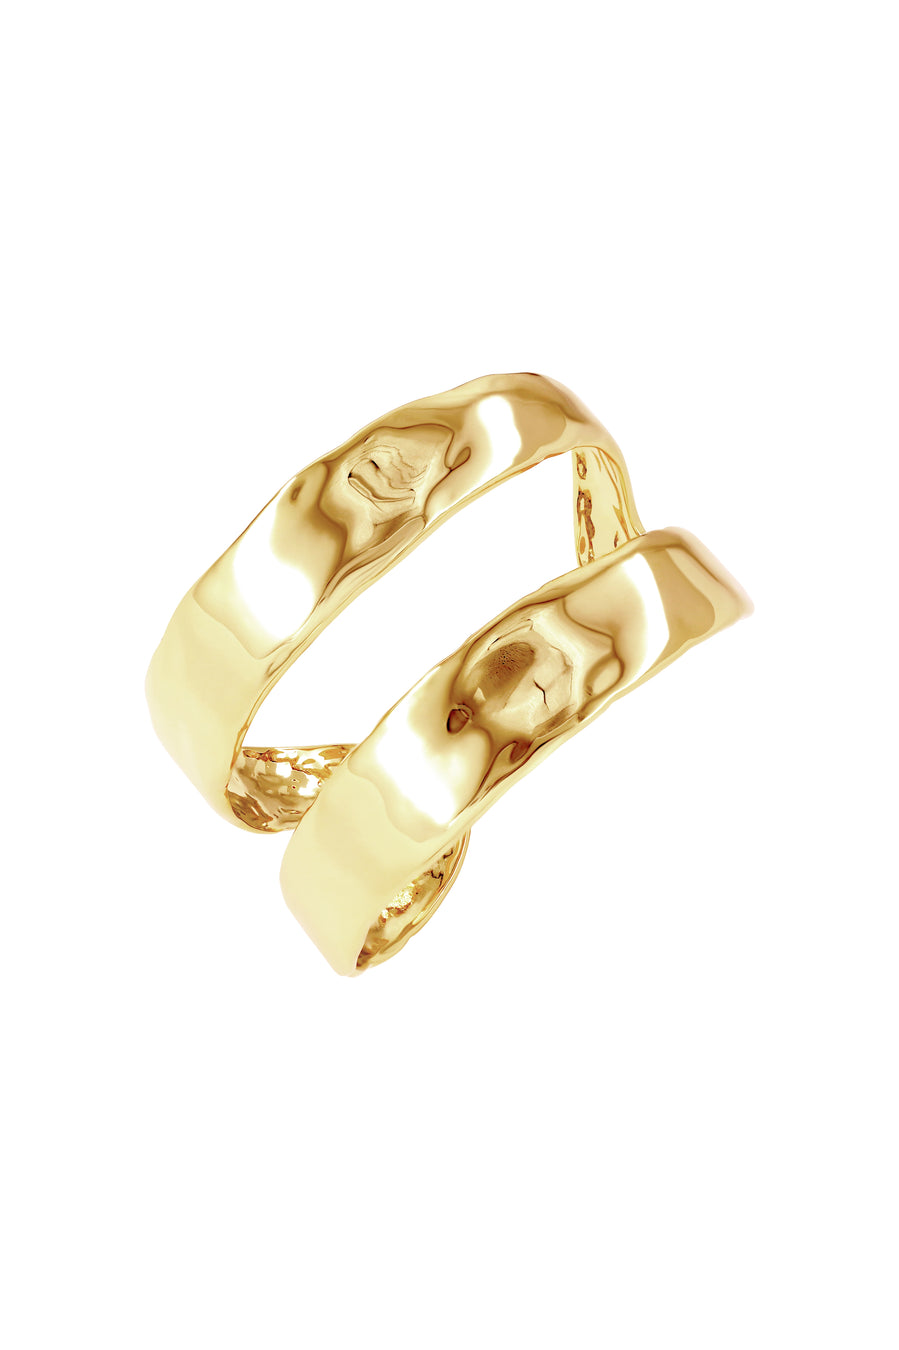 EMPRESS Cuff. Double band cuff bracelet, 18K gold vermeil, handmade, hypoallergenic, water-resistant